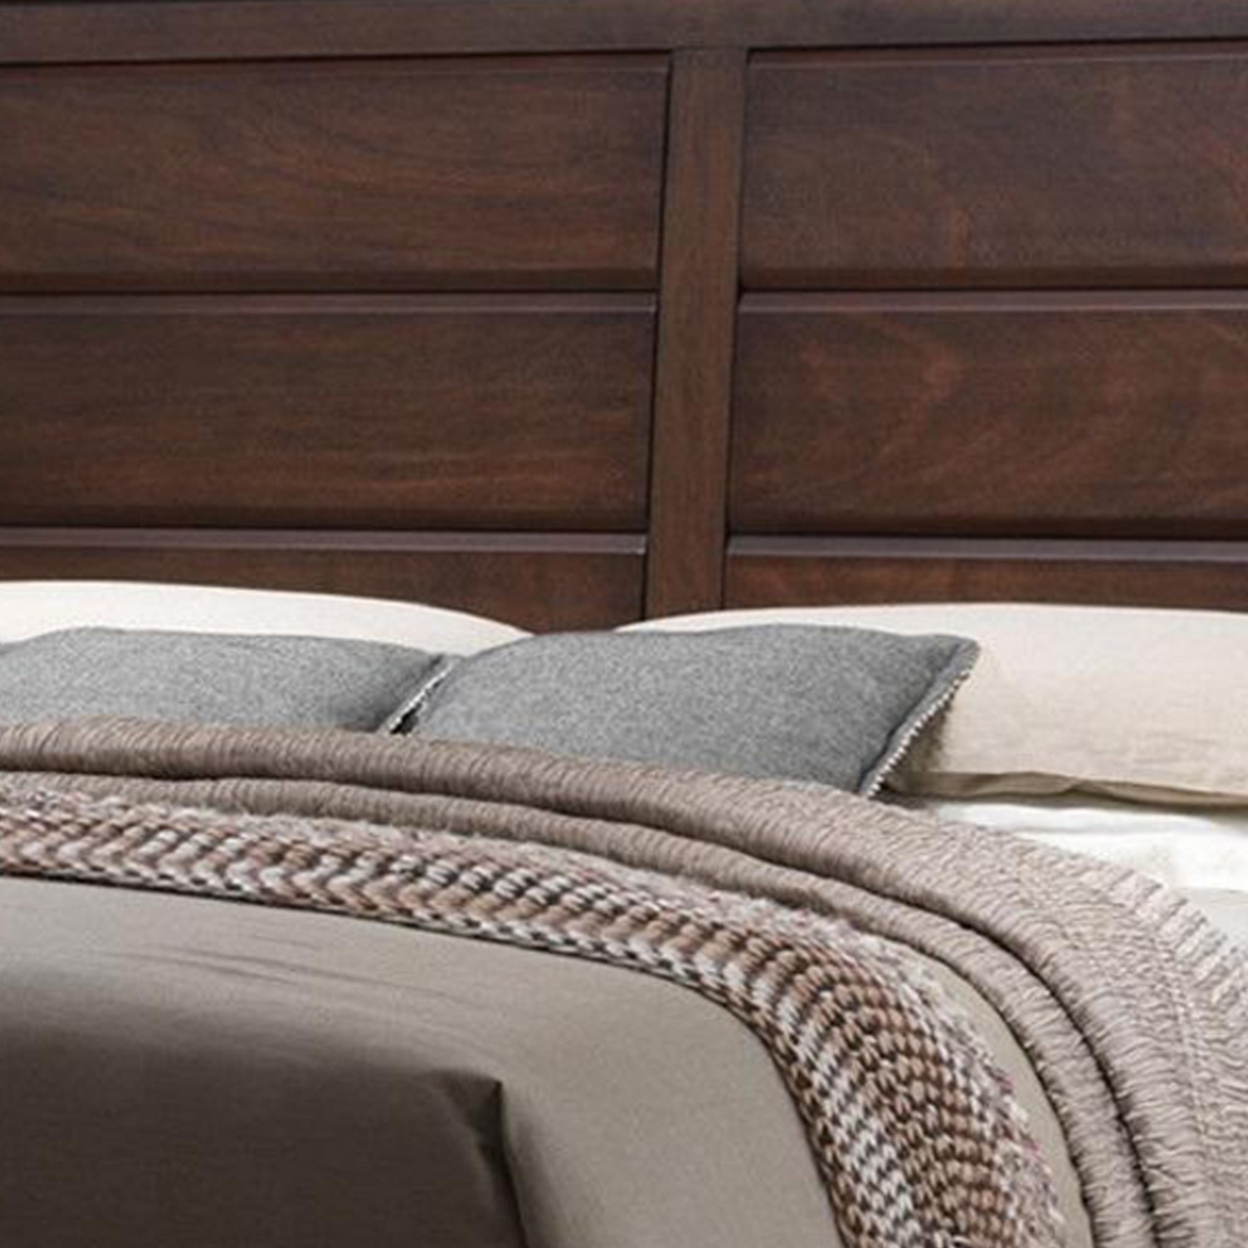 Raised Panel Design Wooden Eastern King Bed With Sleek Legs, Walnut Brown- Saltoro Sherpi